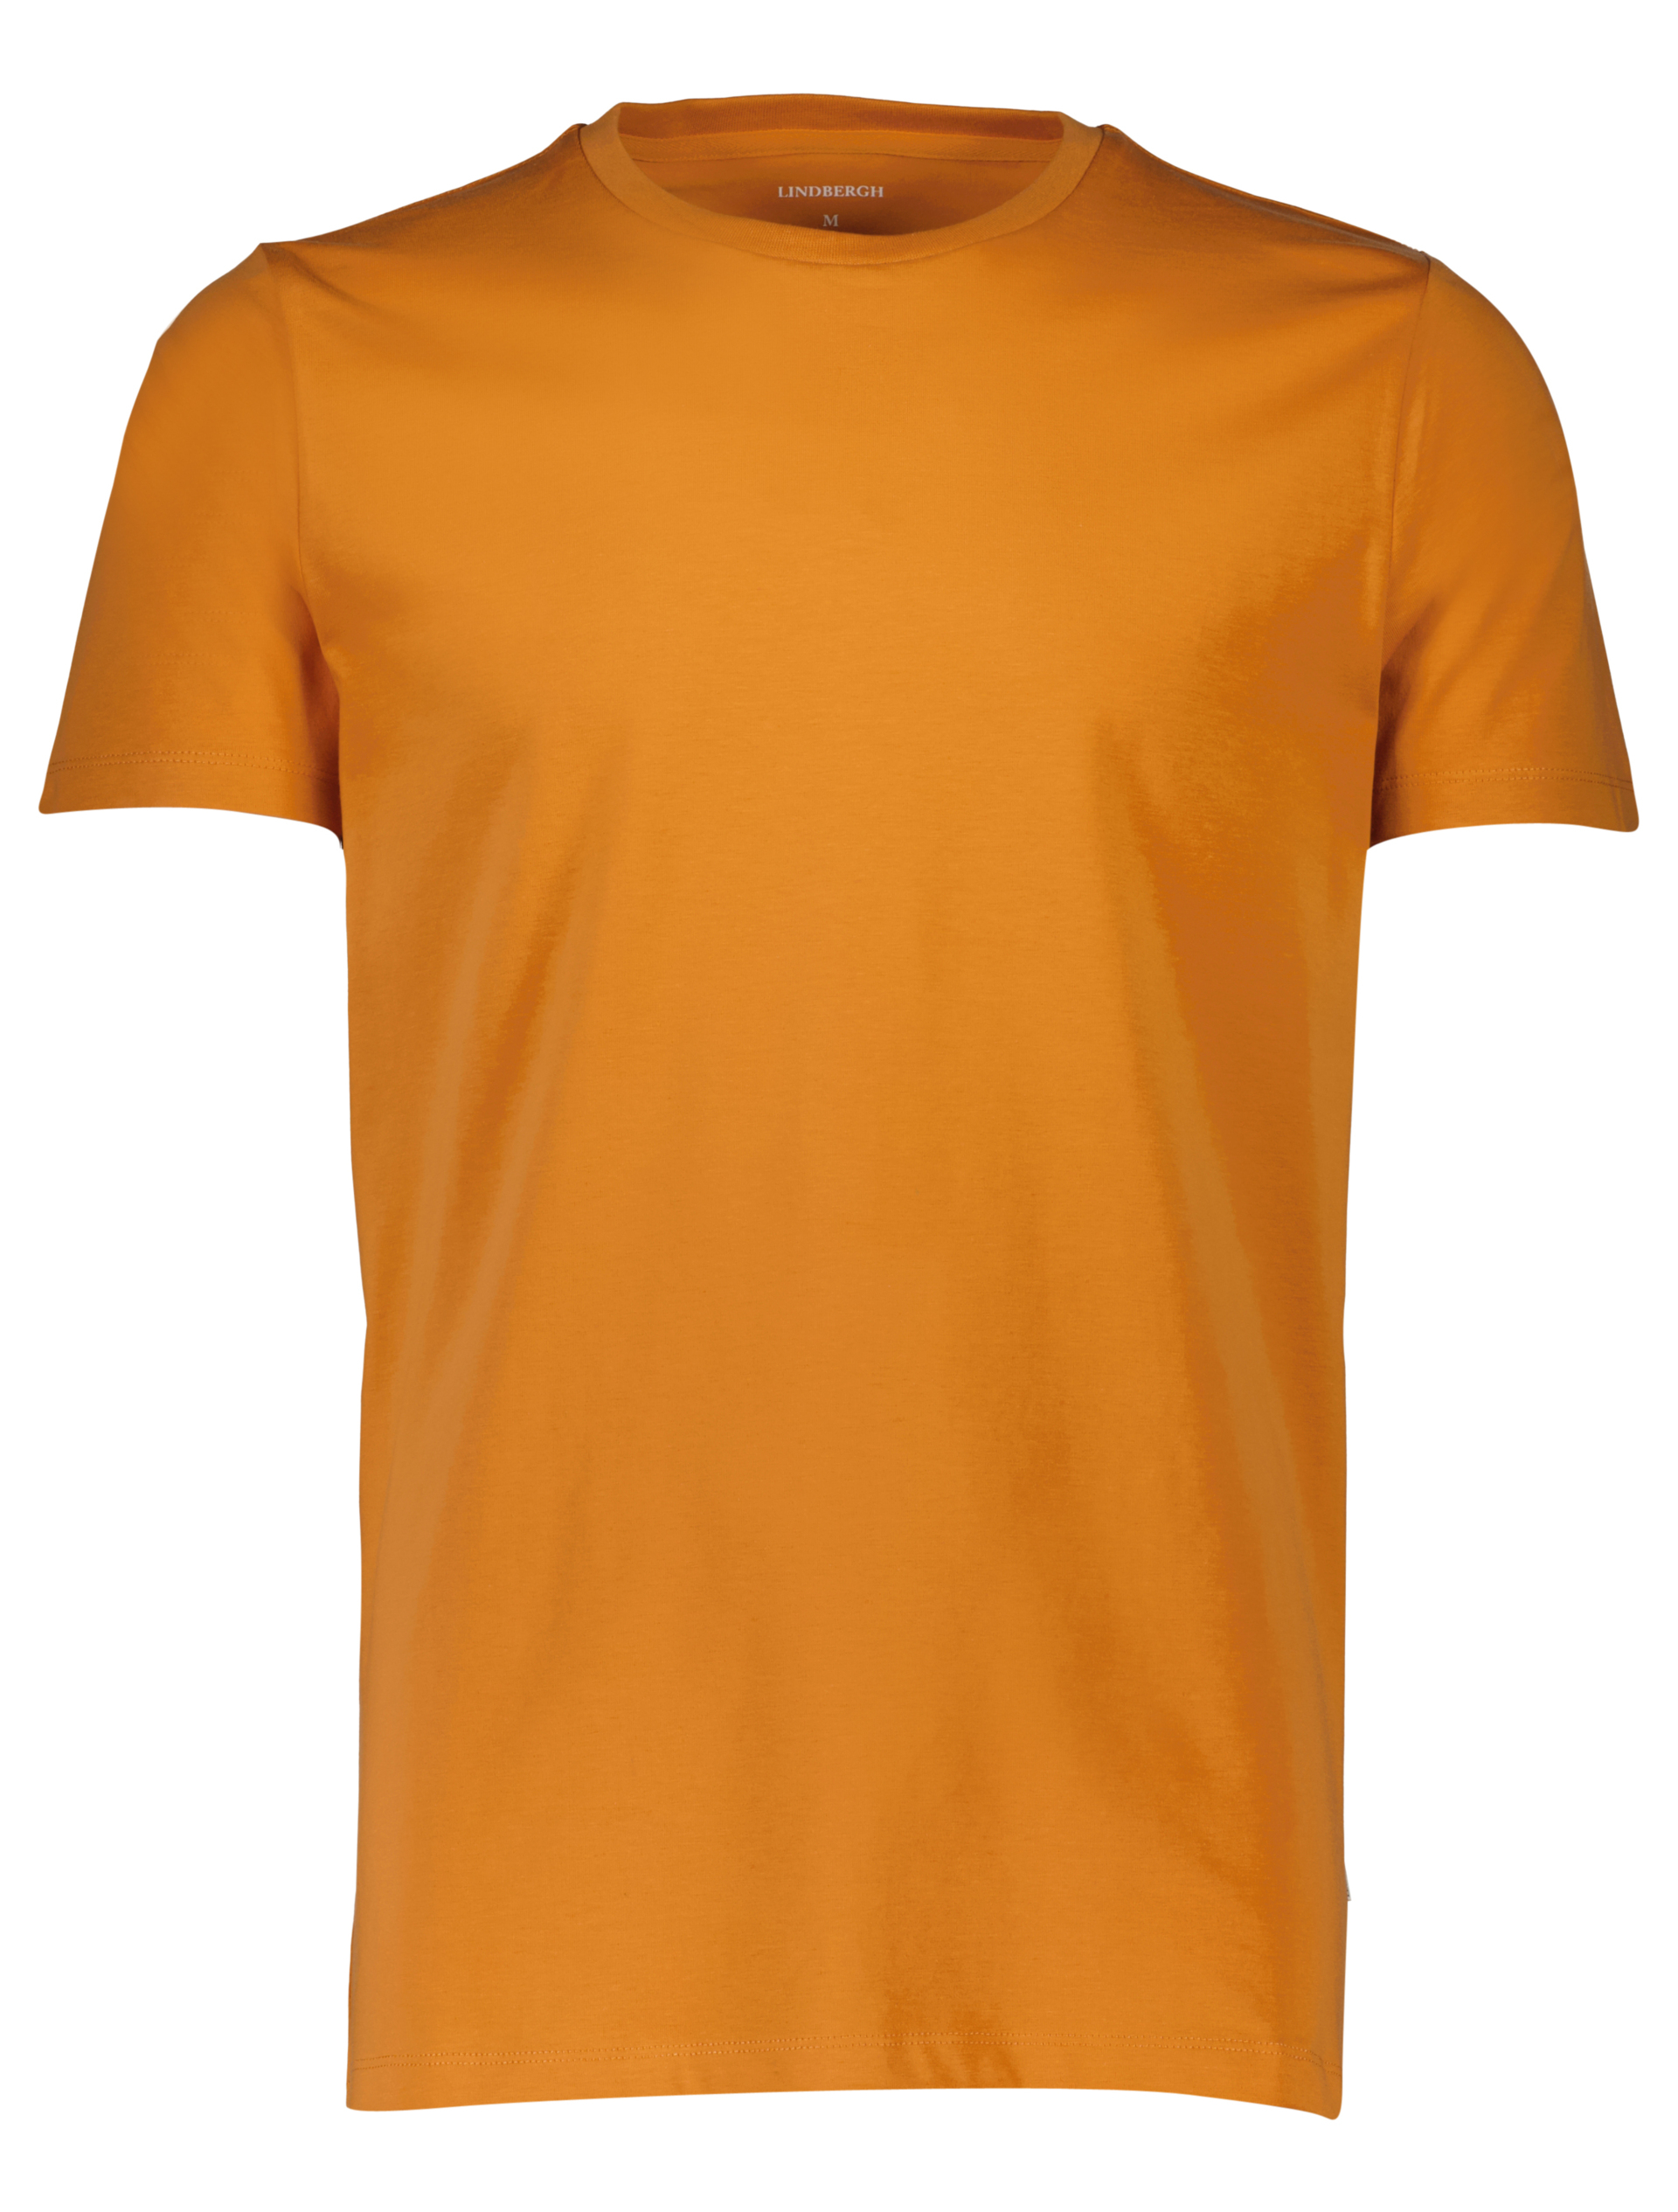 Lindbergh T-shirt orange / burnt orange